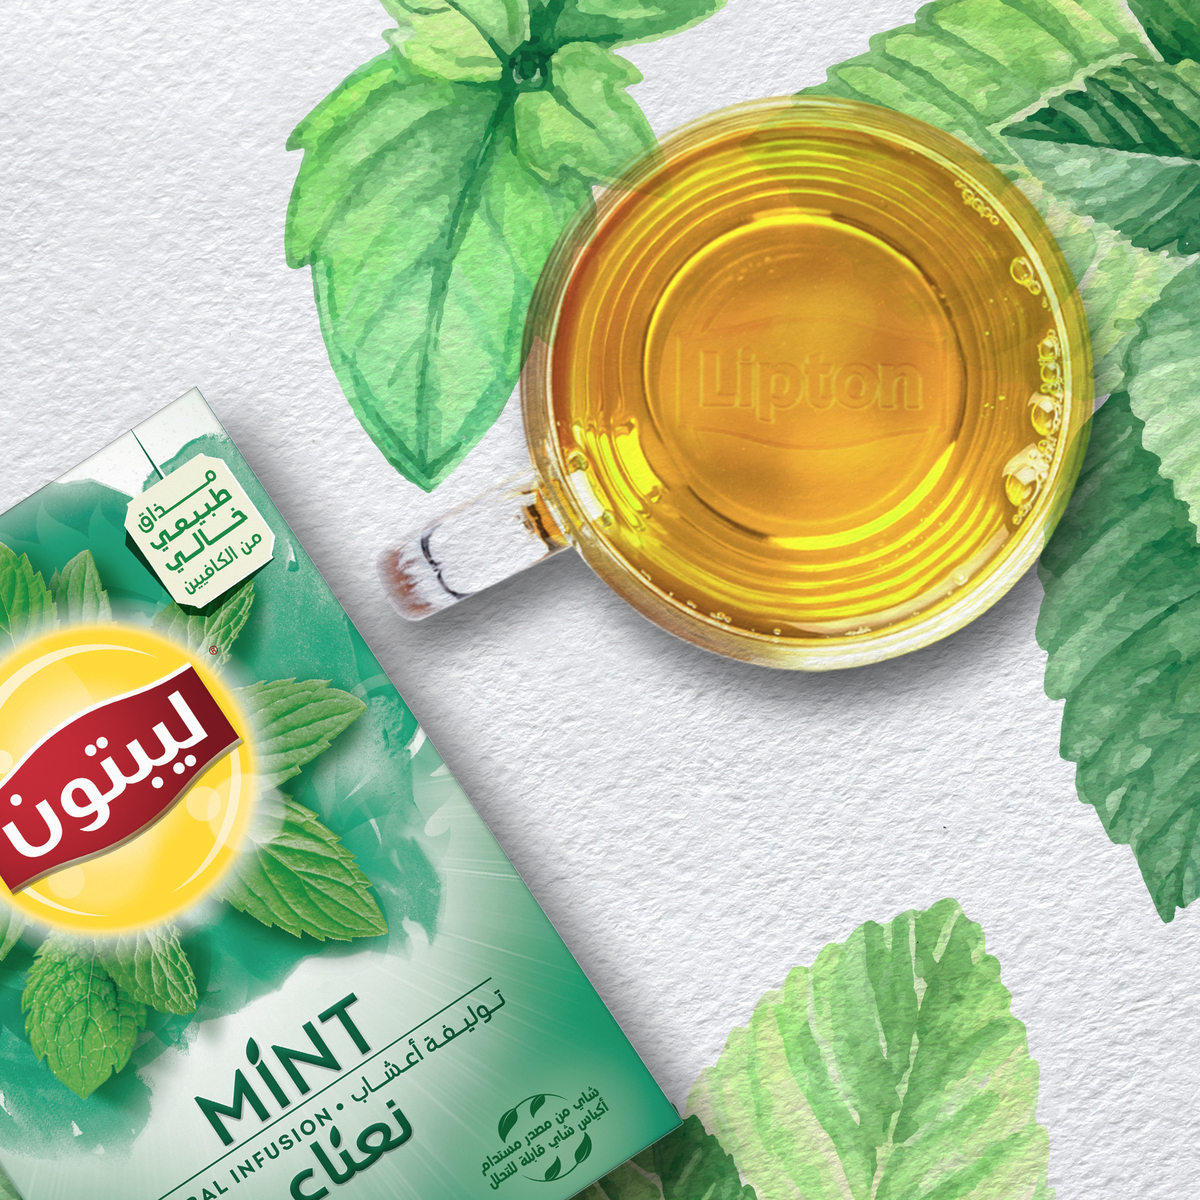 Lipton Mint Herbal Infusion Tea 20 Teabags